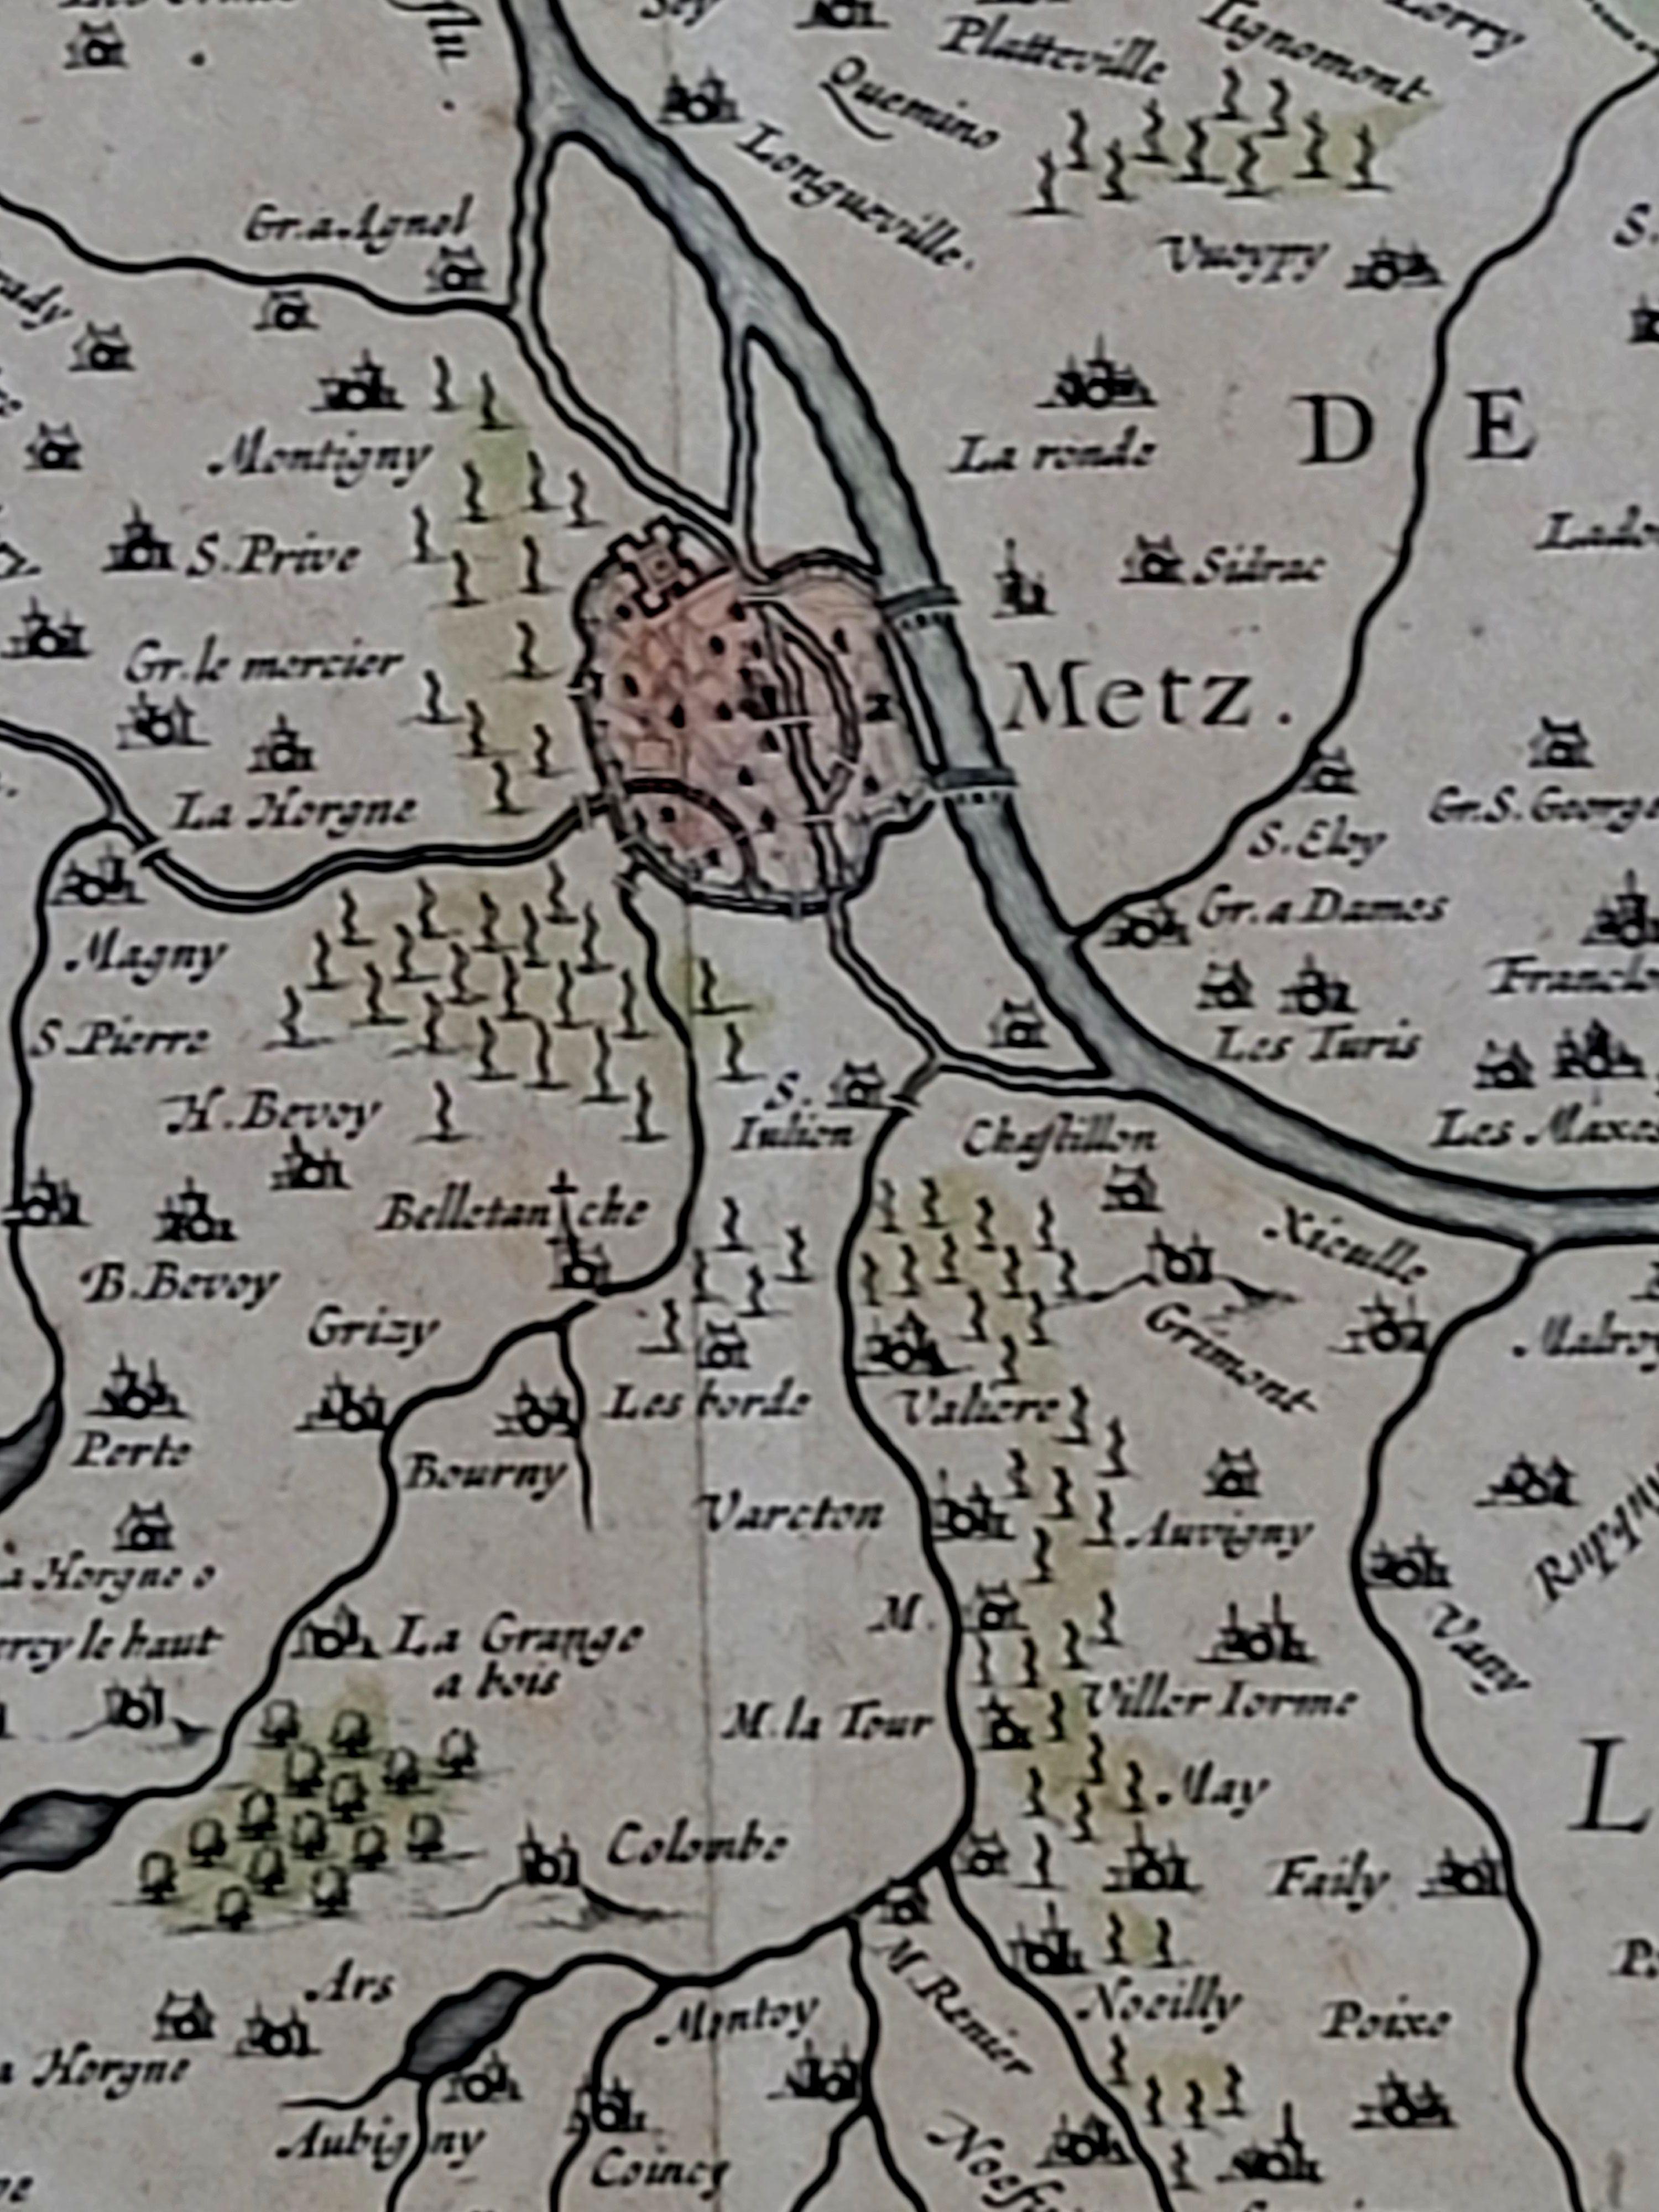 Paper 1656 Jansson Map Metz Region of France Entitled 